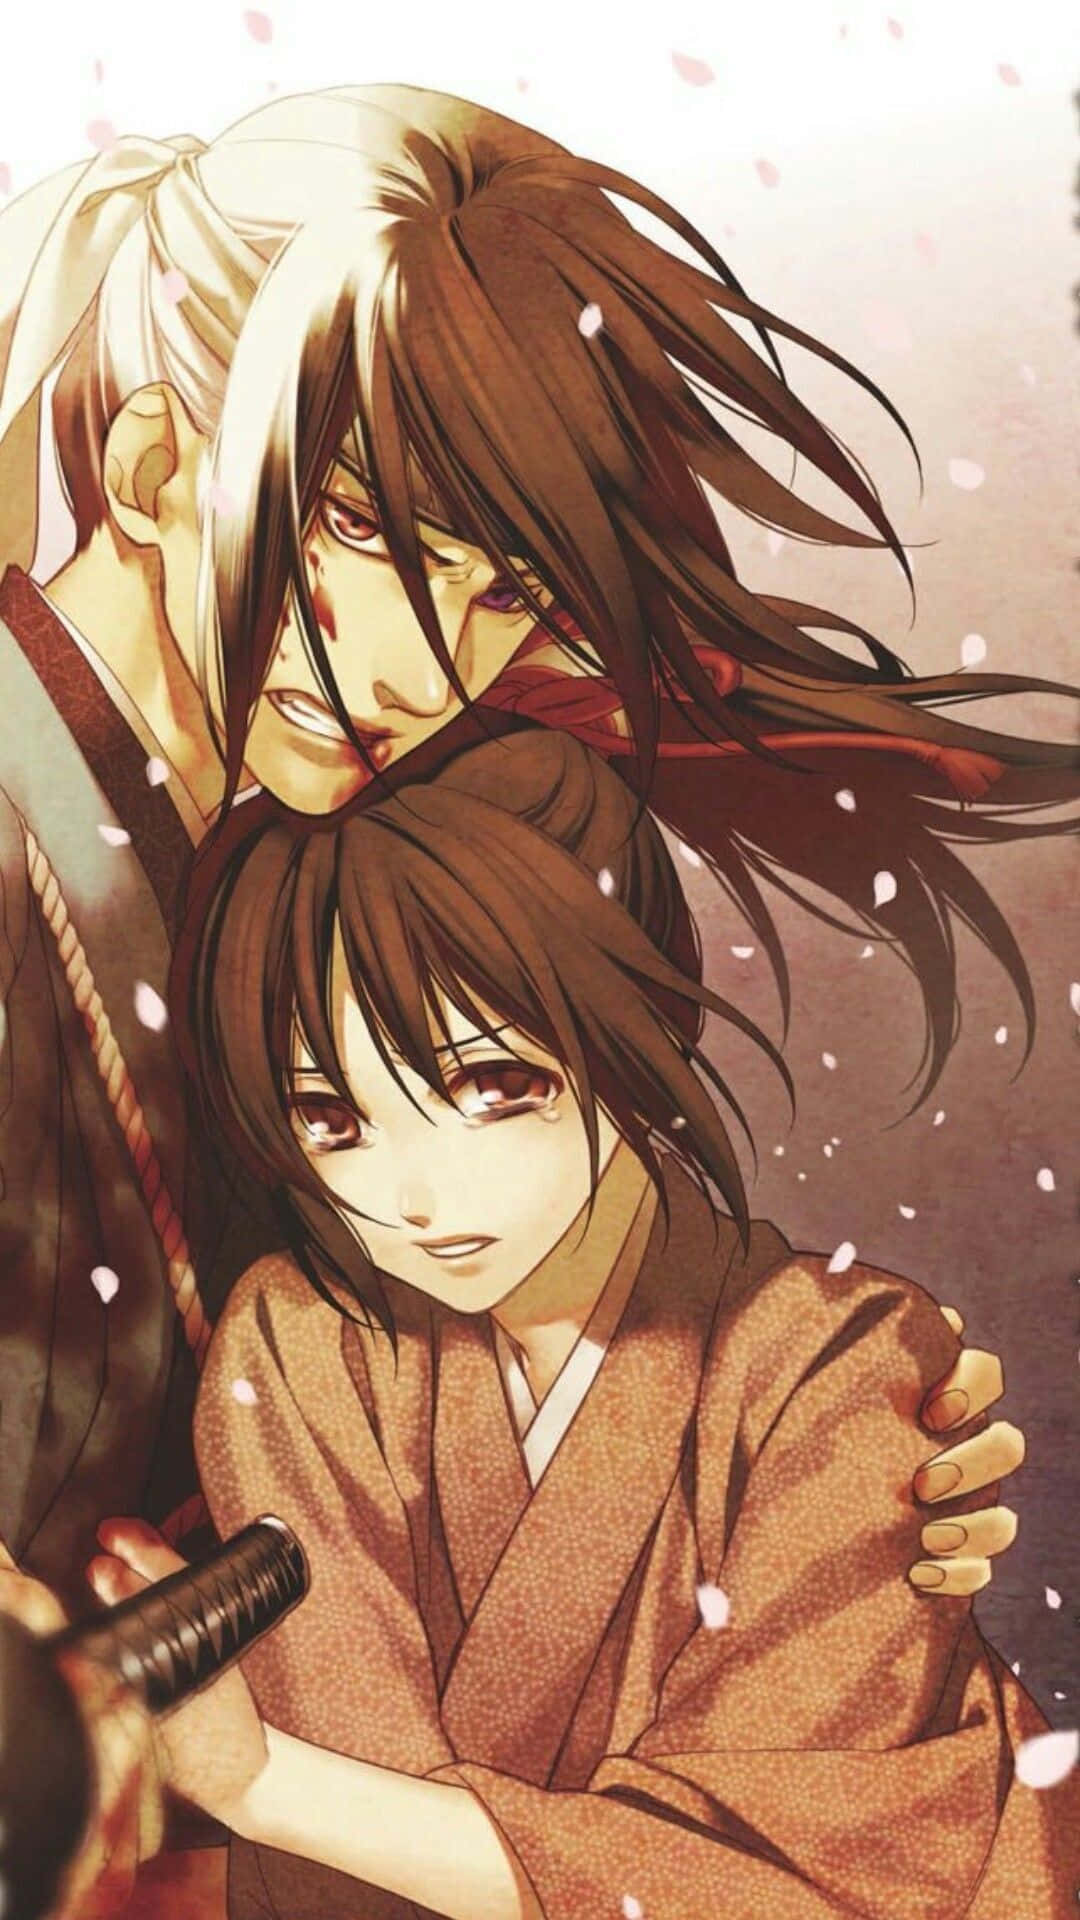 Kenshin And Kaoru - A Tale Of Samurai Love And Adventure Wallpaper